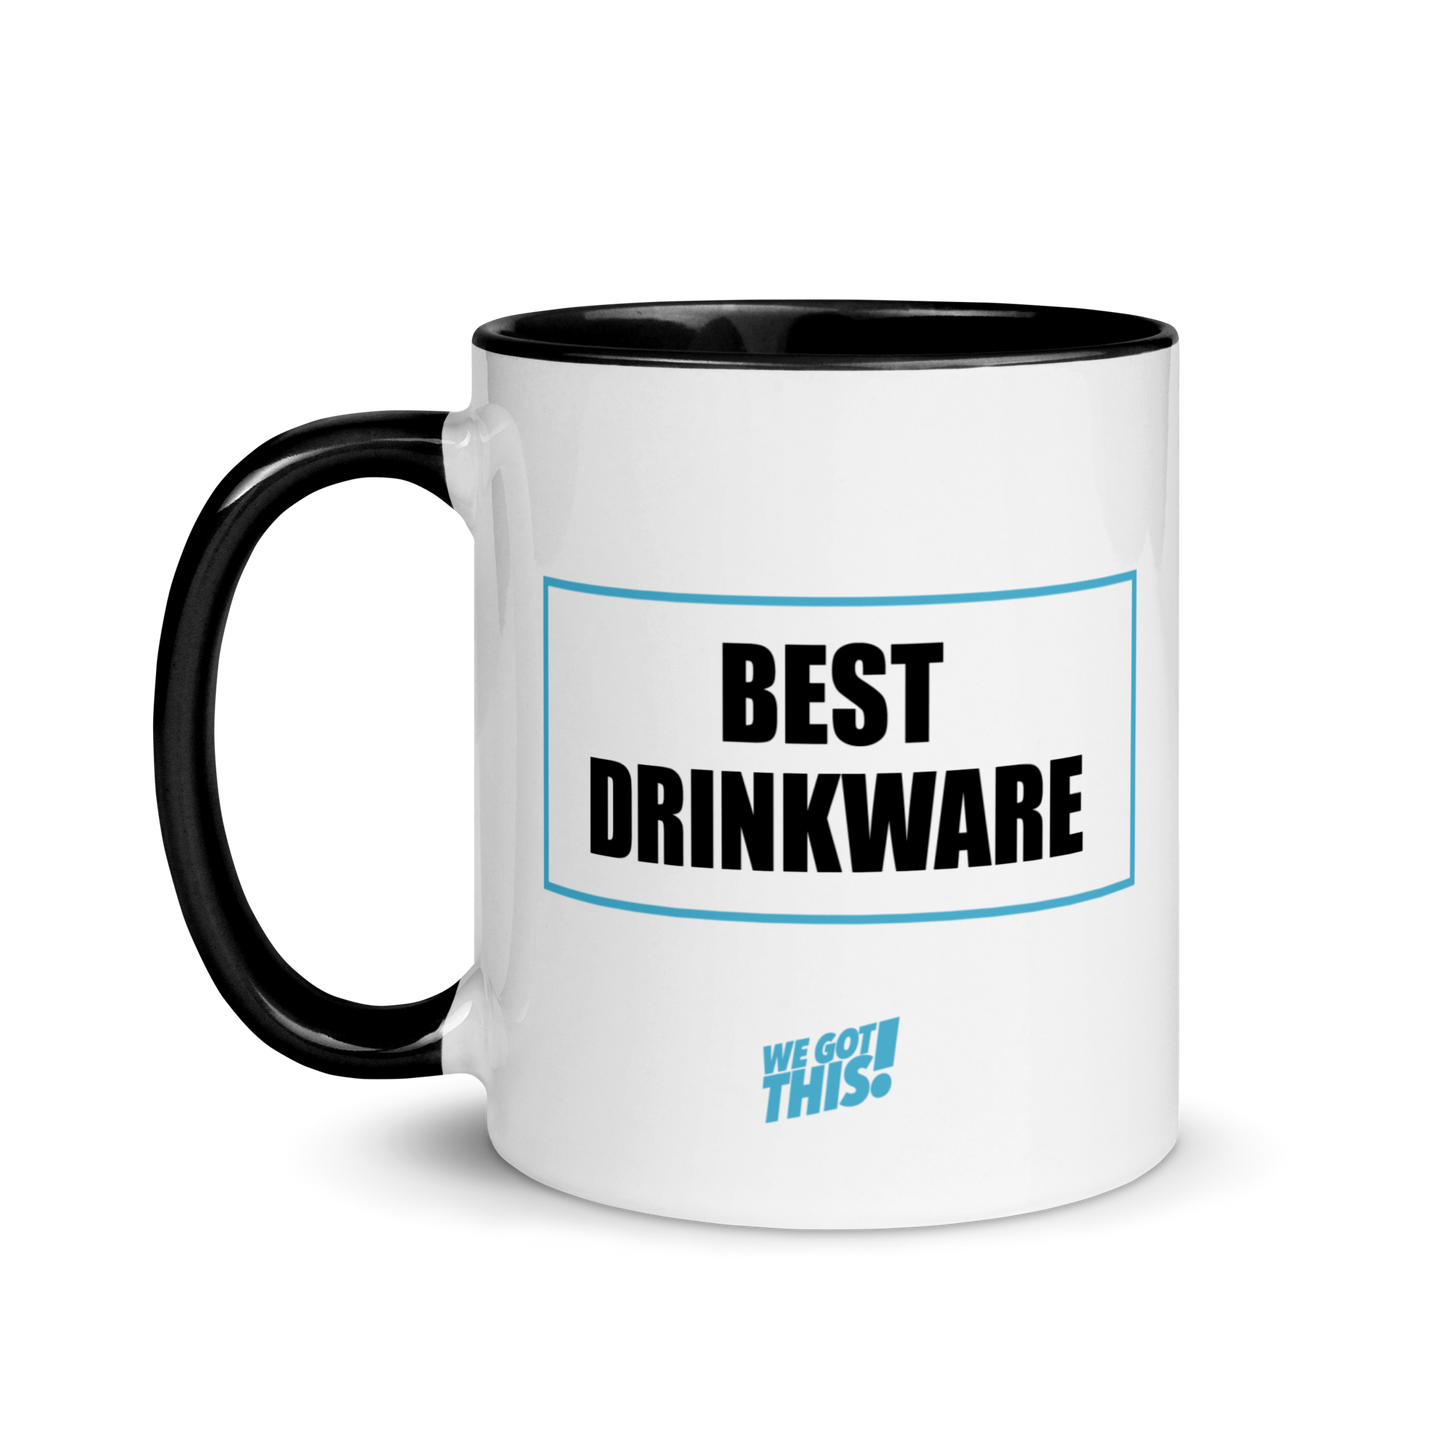 Best Drinkware